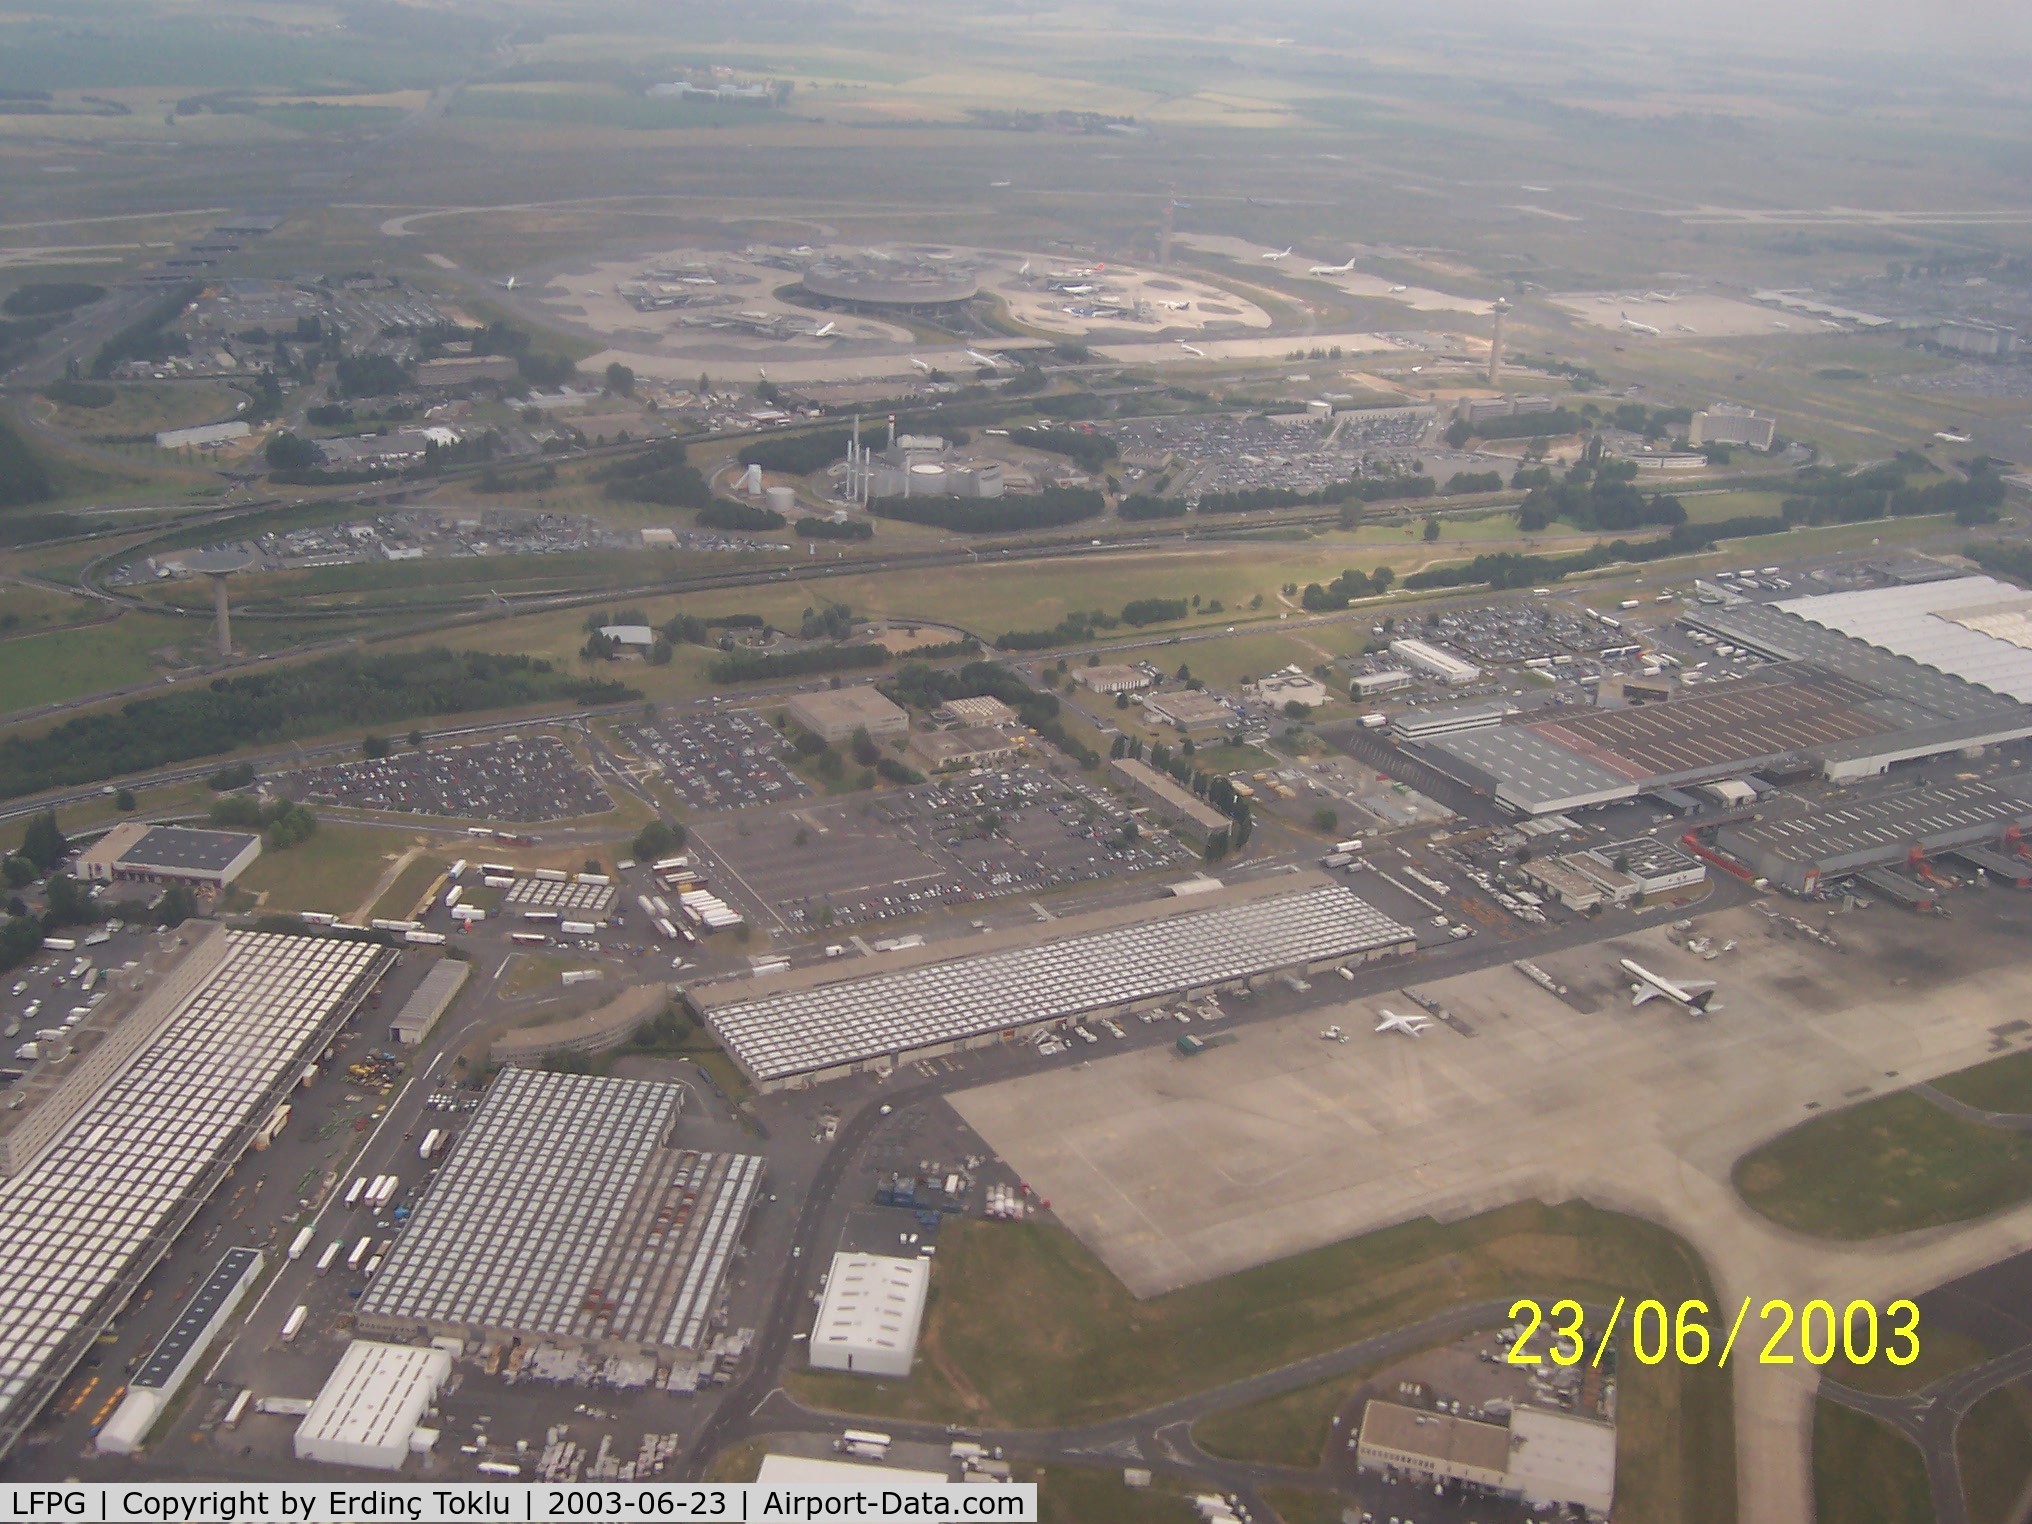 Paris Charles de Gaulle Airport (Roissy Airport), Paris France (LFPG) - Maintenance area & Terminal 1 (upper photo)